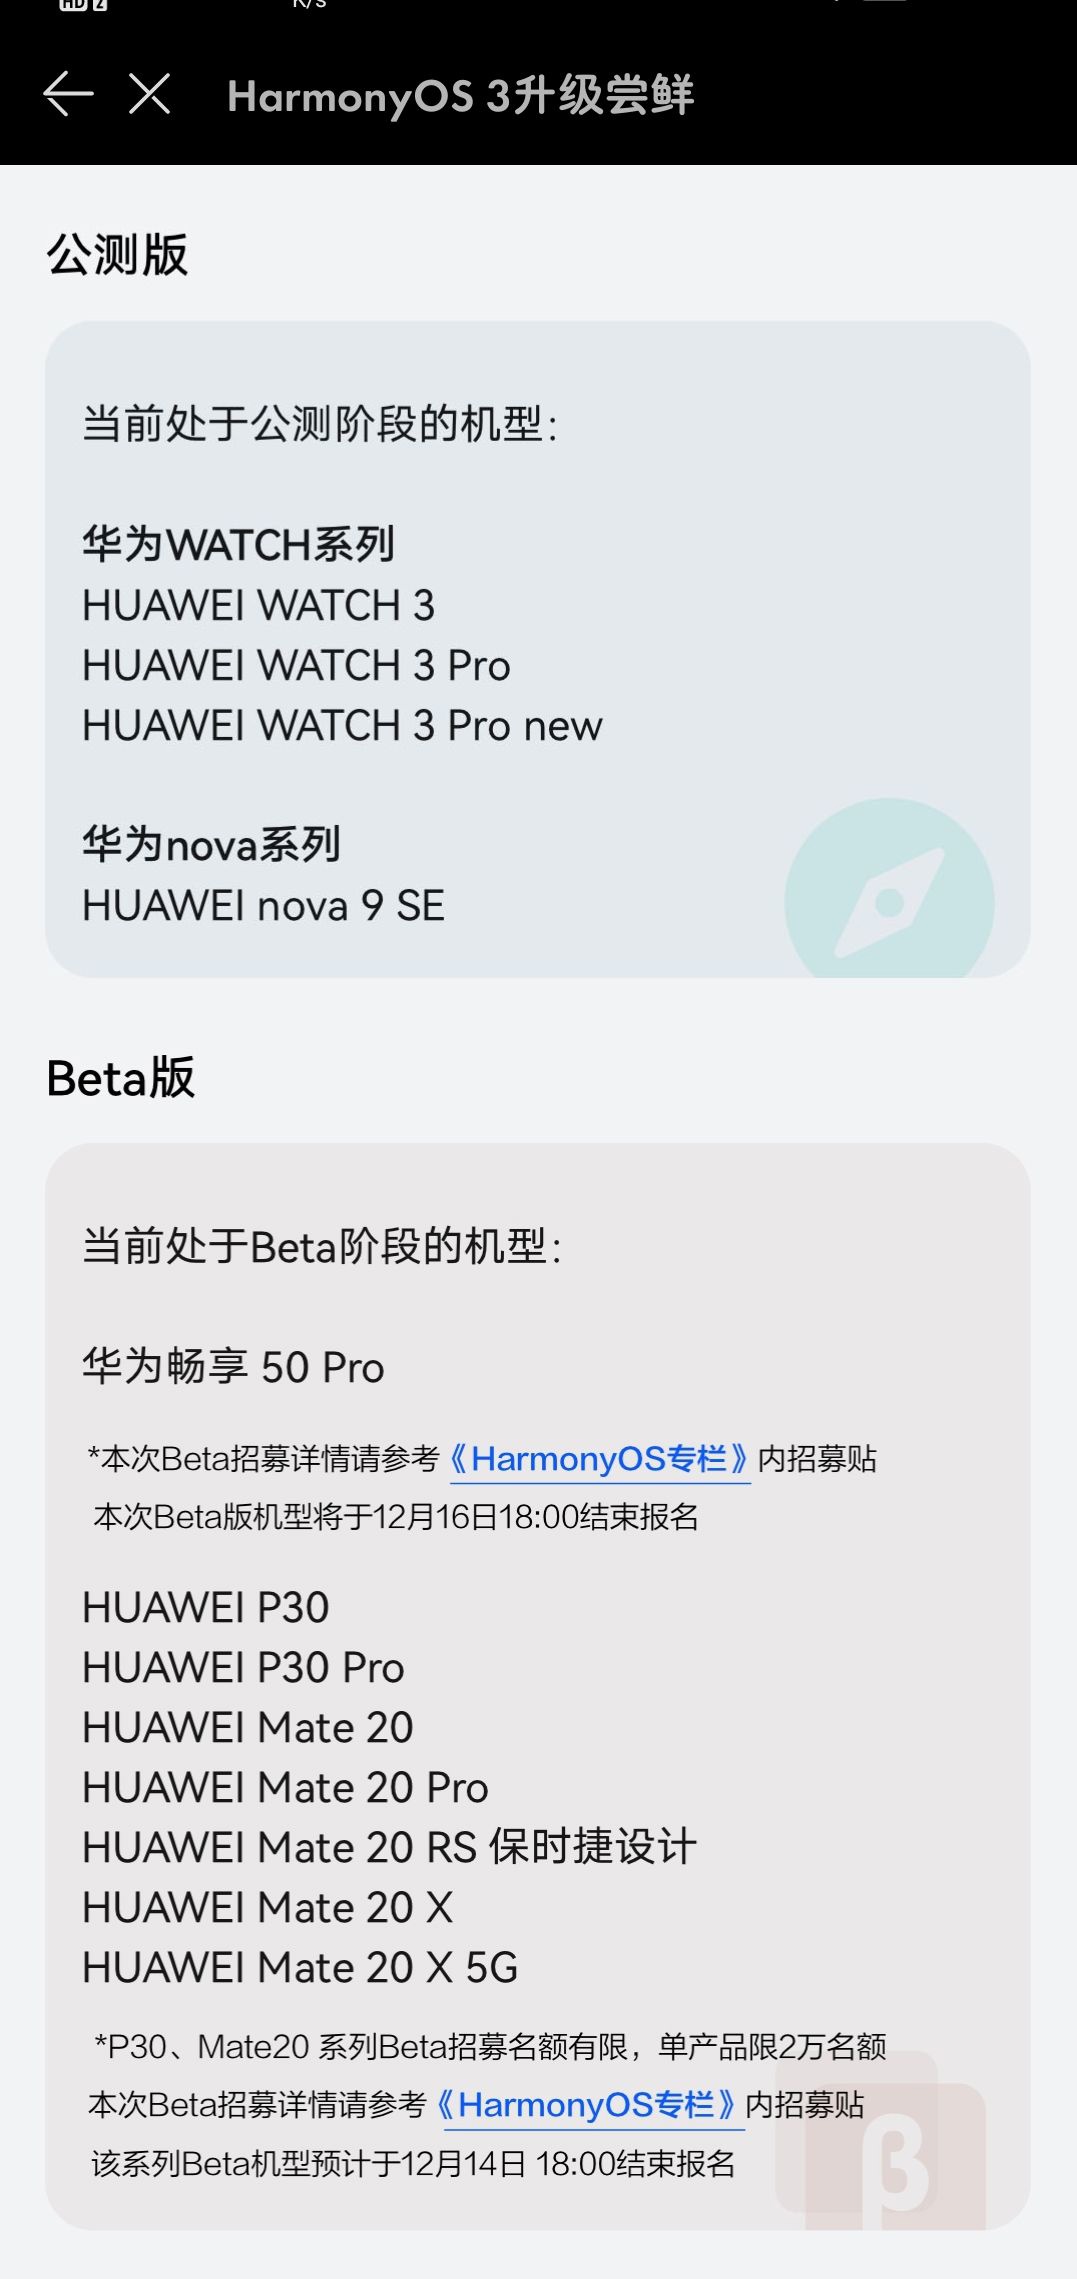 Huawei P30, Mate 20 series HarmonyOS 3 closed beta recruitment starts